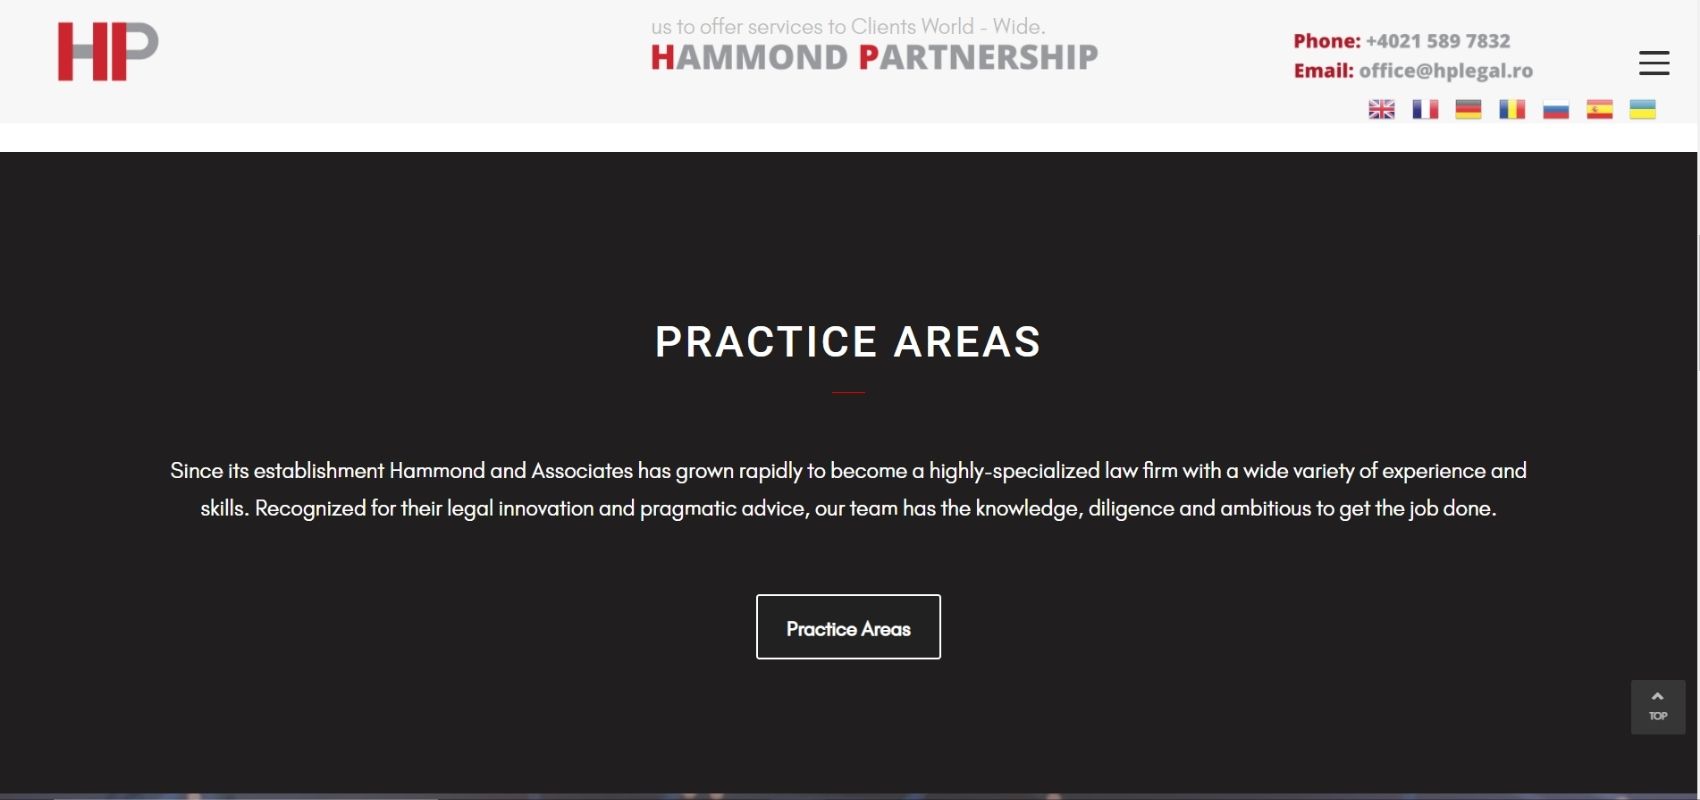 HP Legal Homepage - Practice Areas